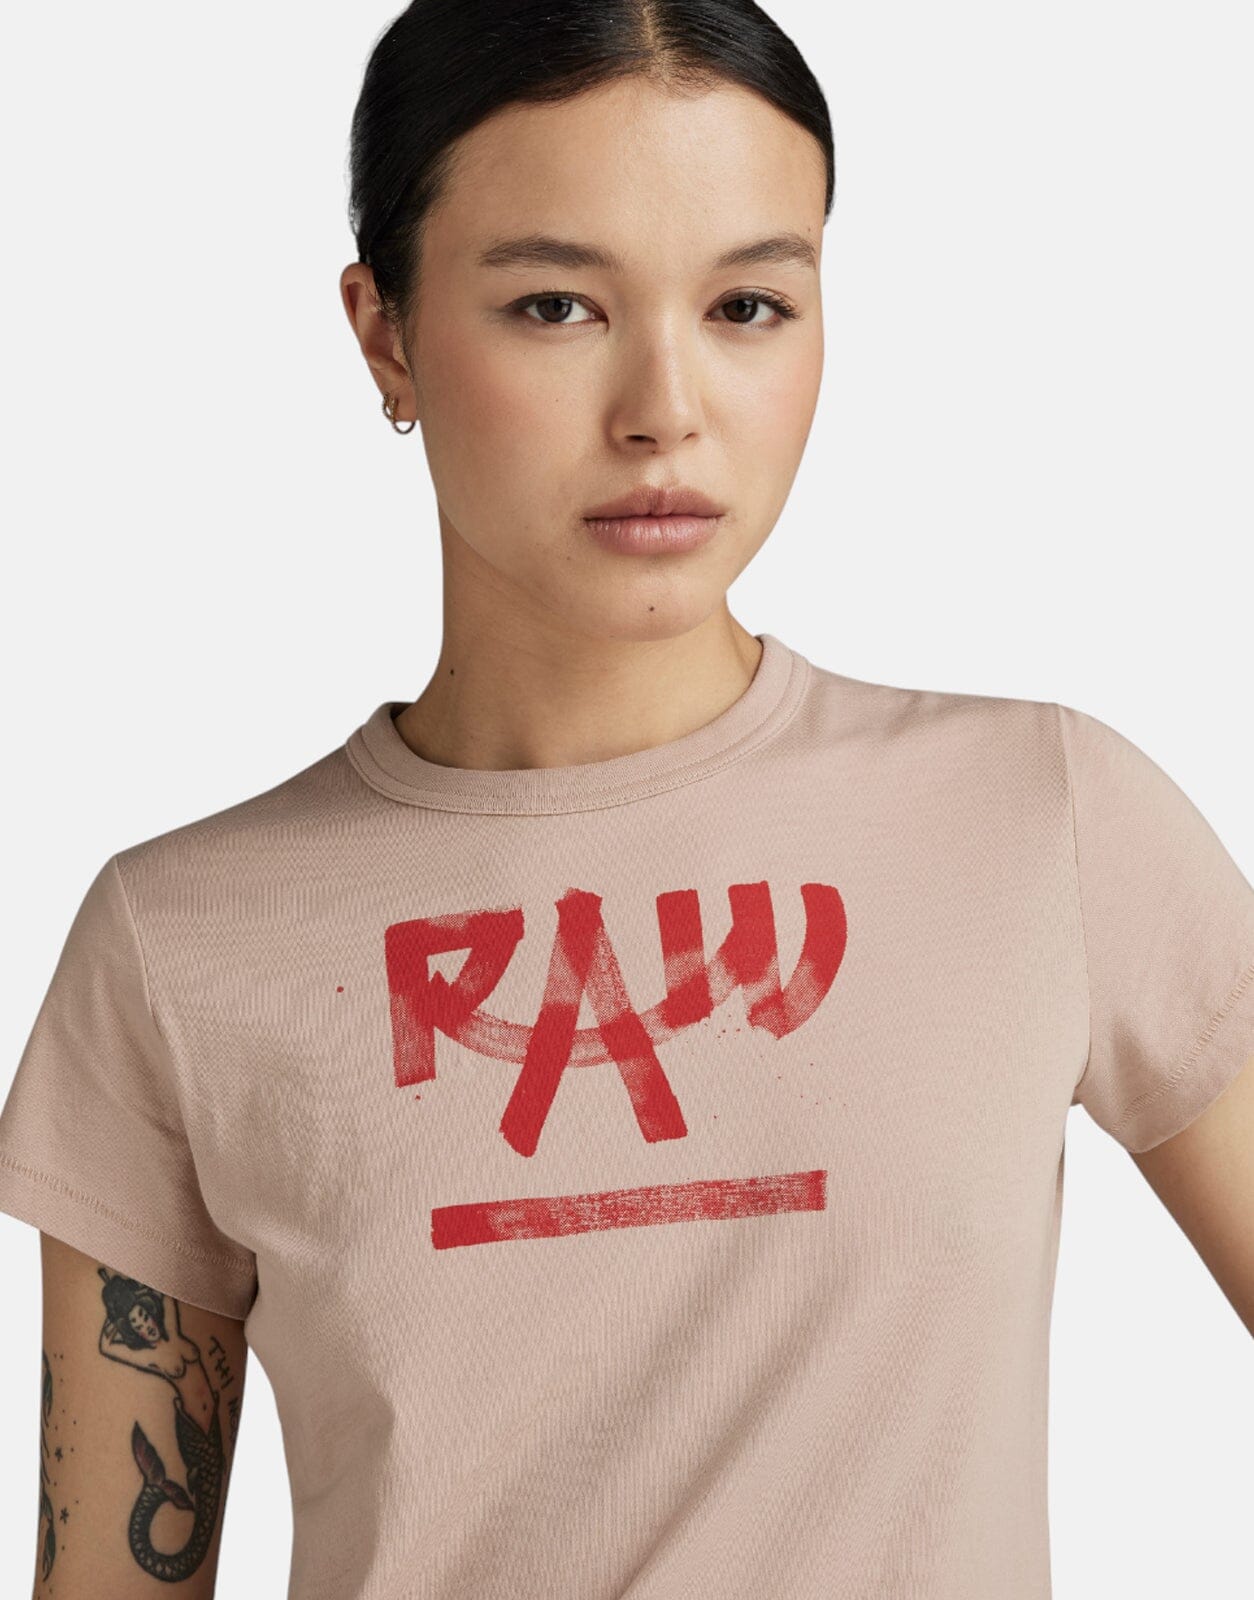 G-Star RAW Calligraphy T-Shirt Moonlight - Subwear